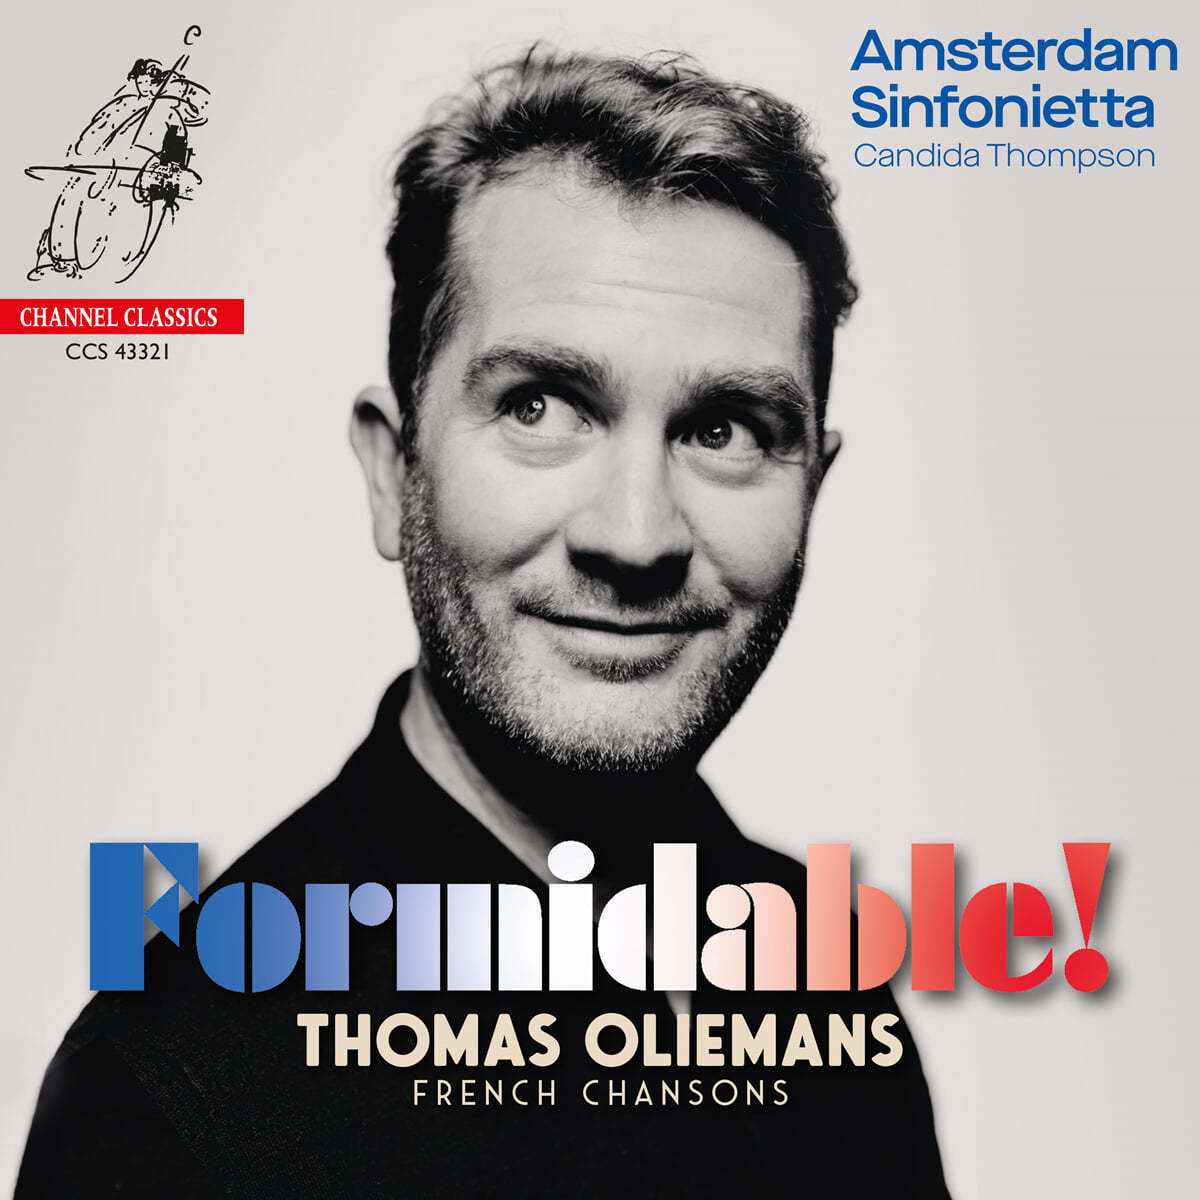 Thomas Oliemans 올리만스가 부르는 프랑스 샹송 모음 (French Chansons - Formidable!) 